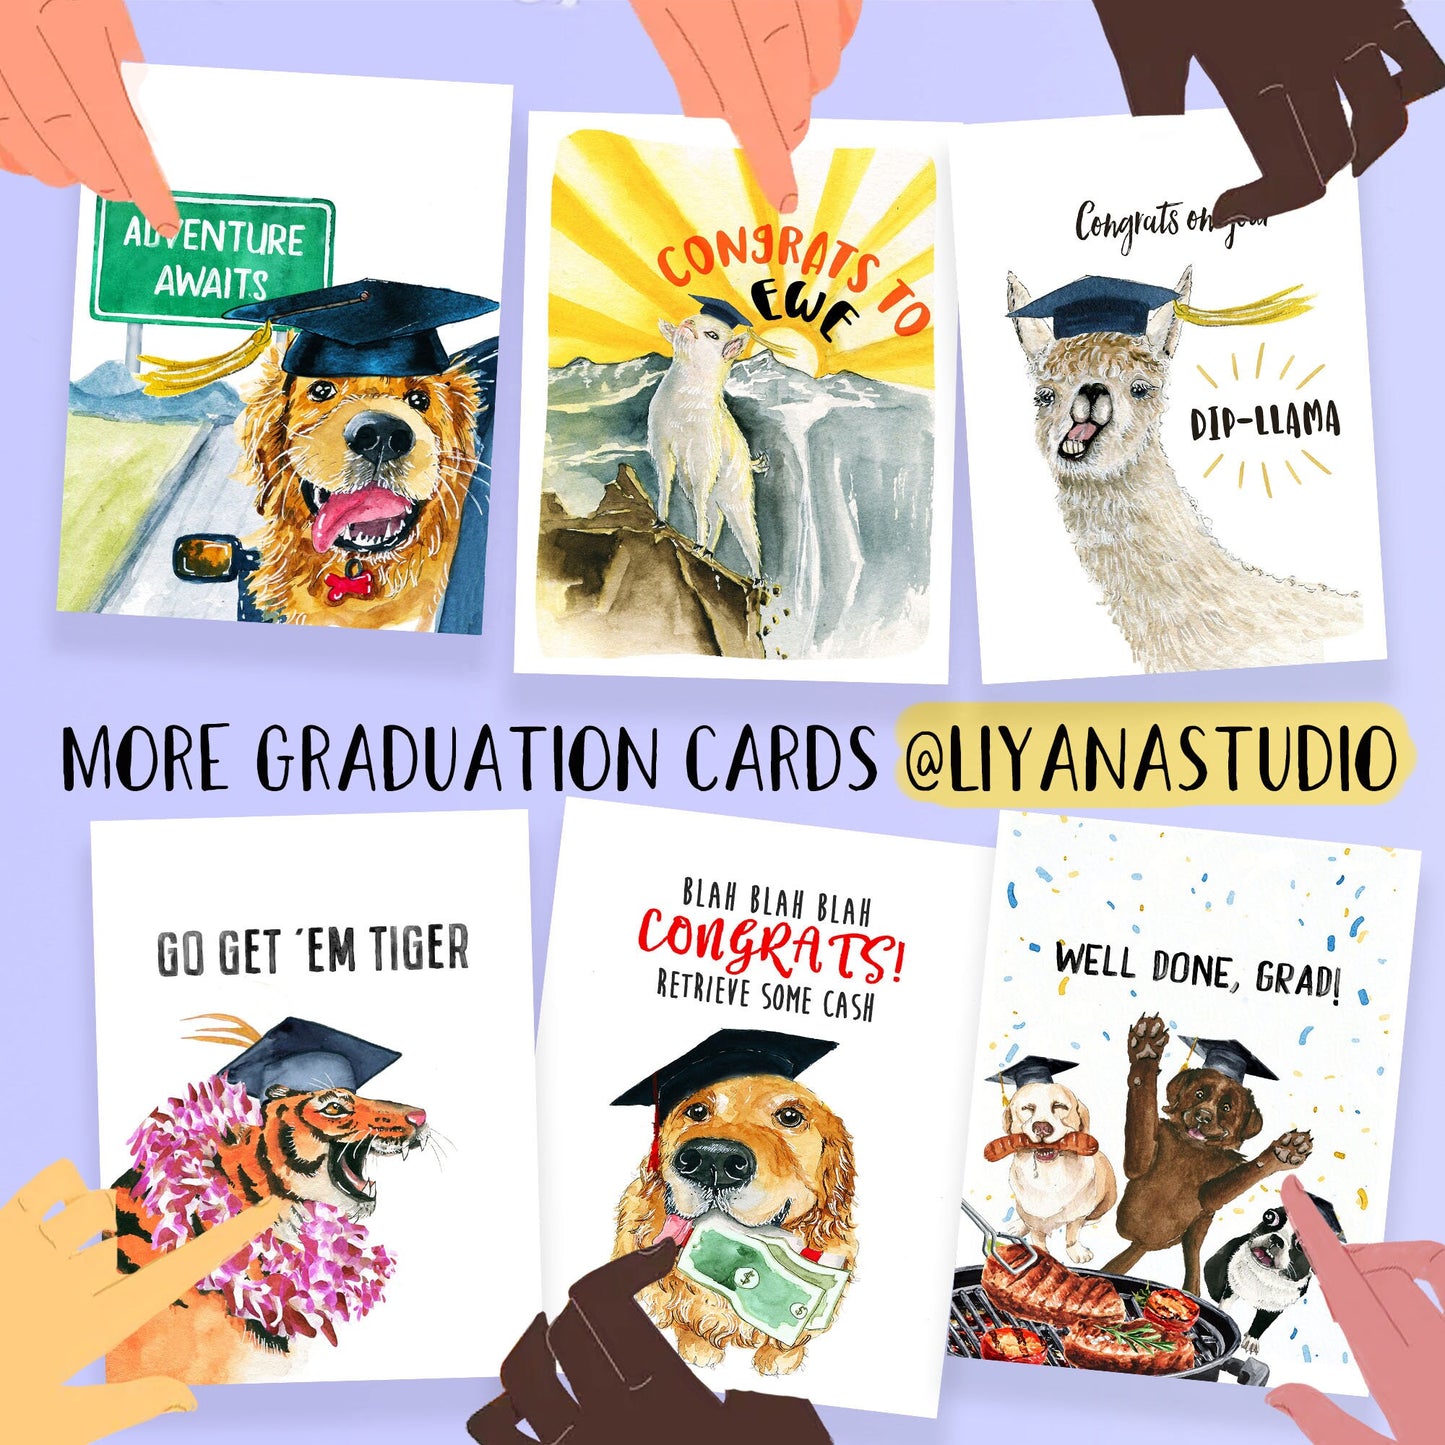 Corgi Dog Graduation Card Funny - Corgi-lations Congratulations Card For Son